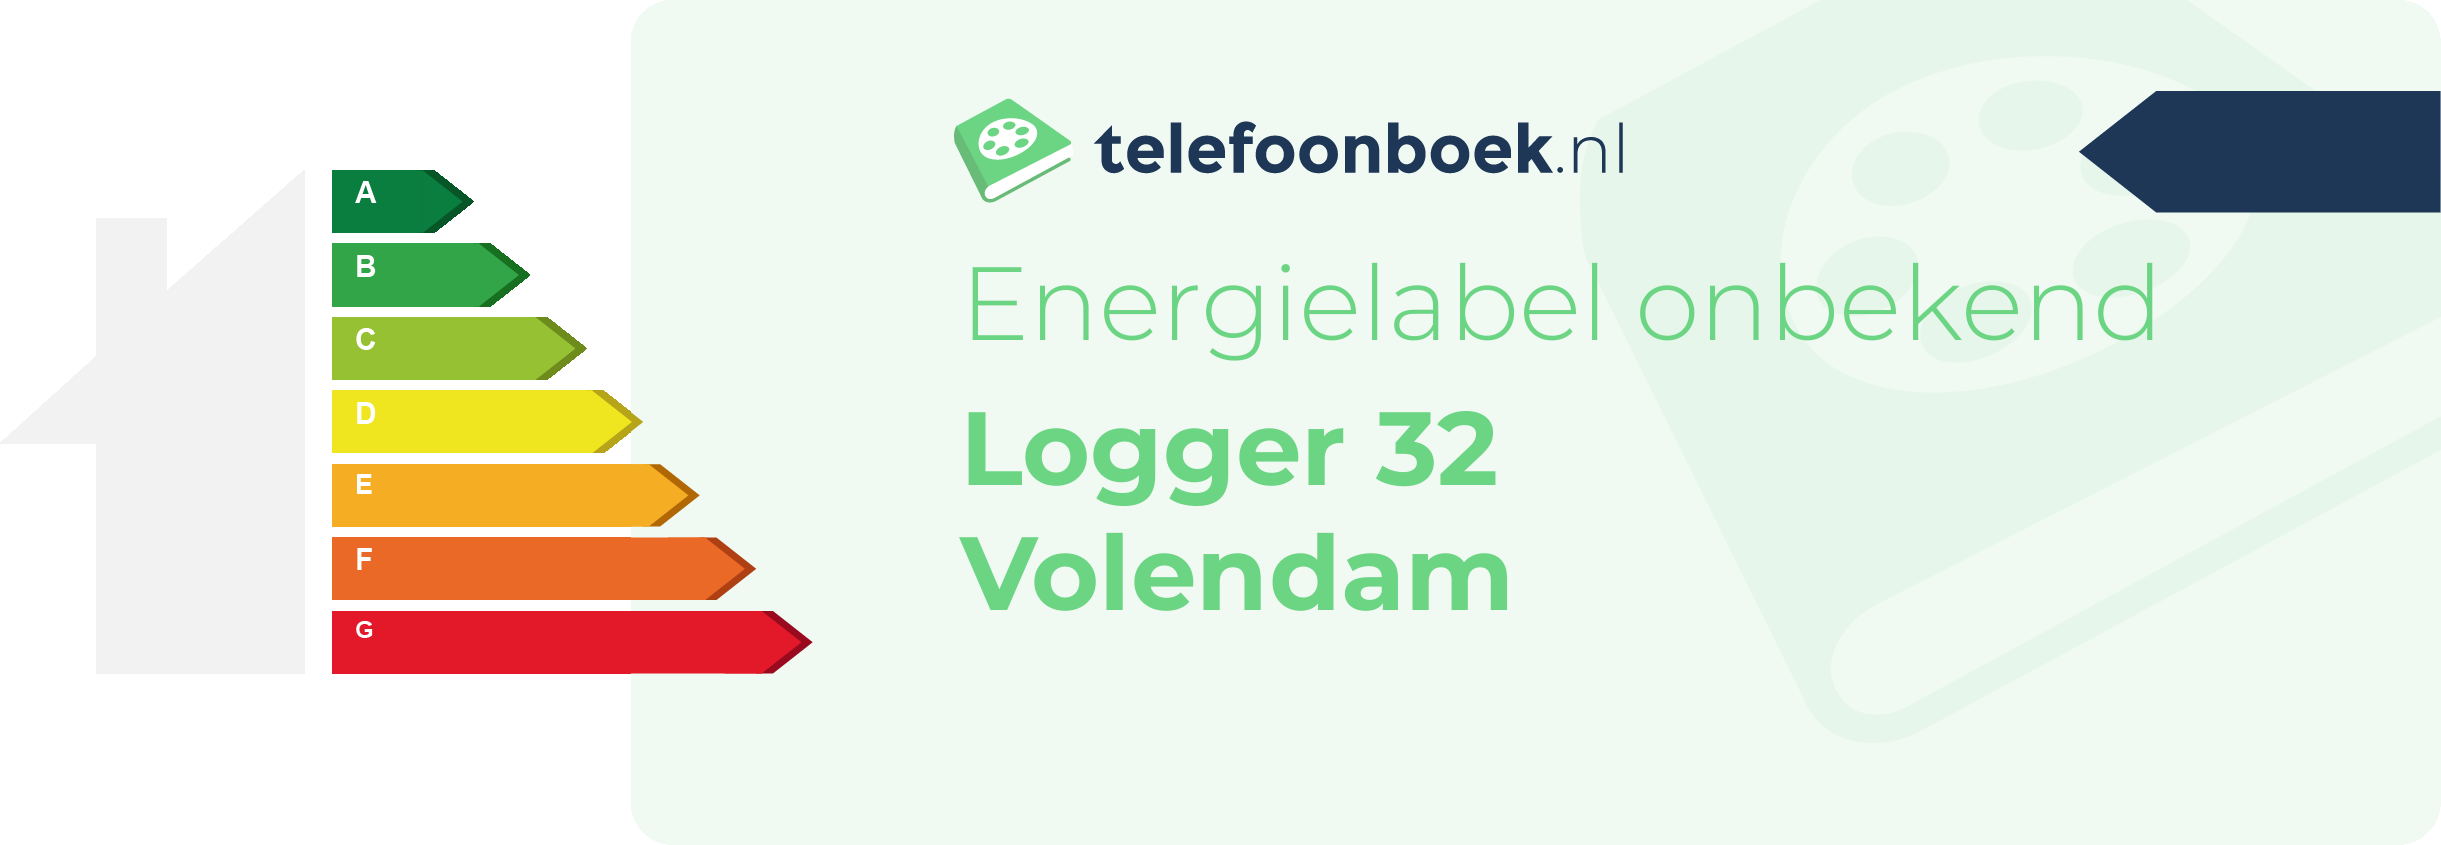 Energielabel Logger 32 Volendam